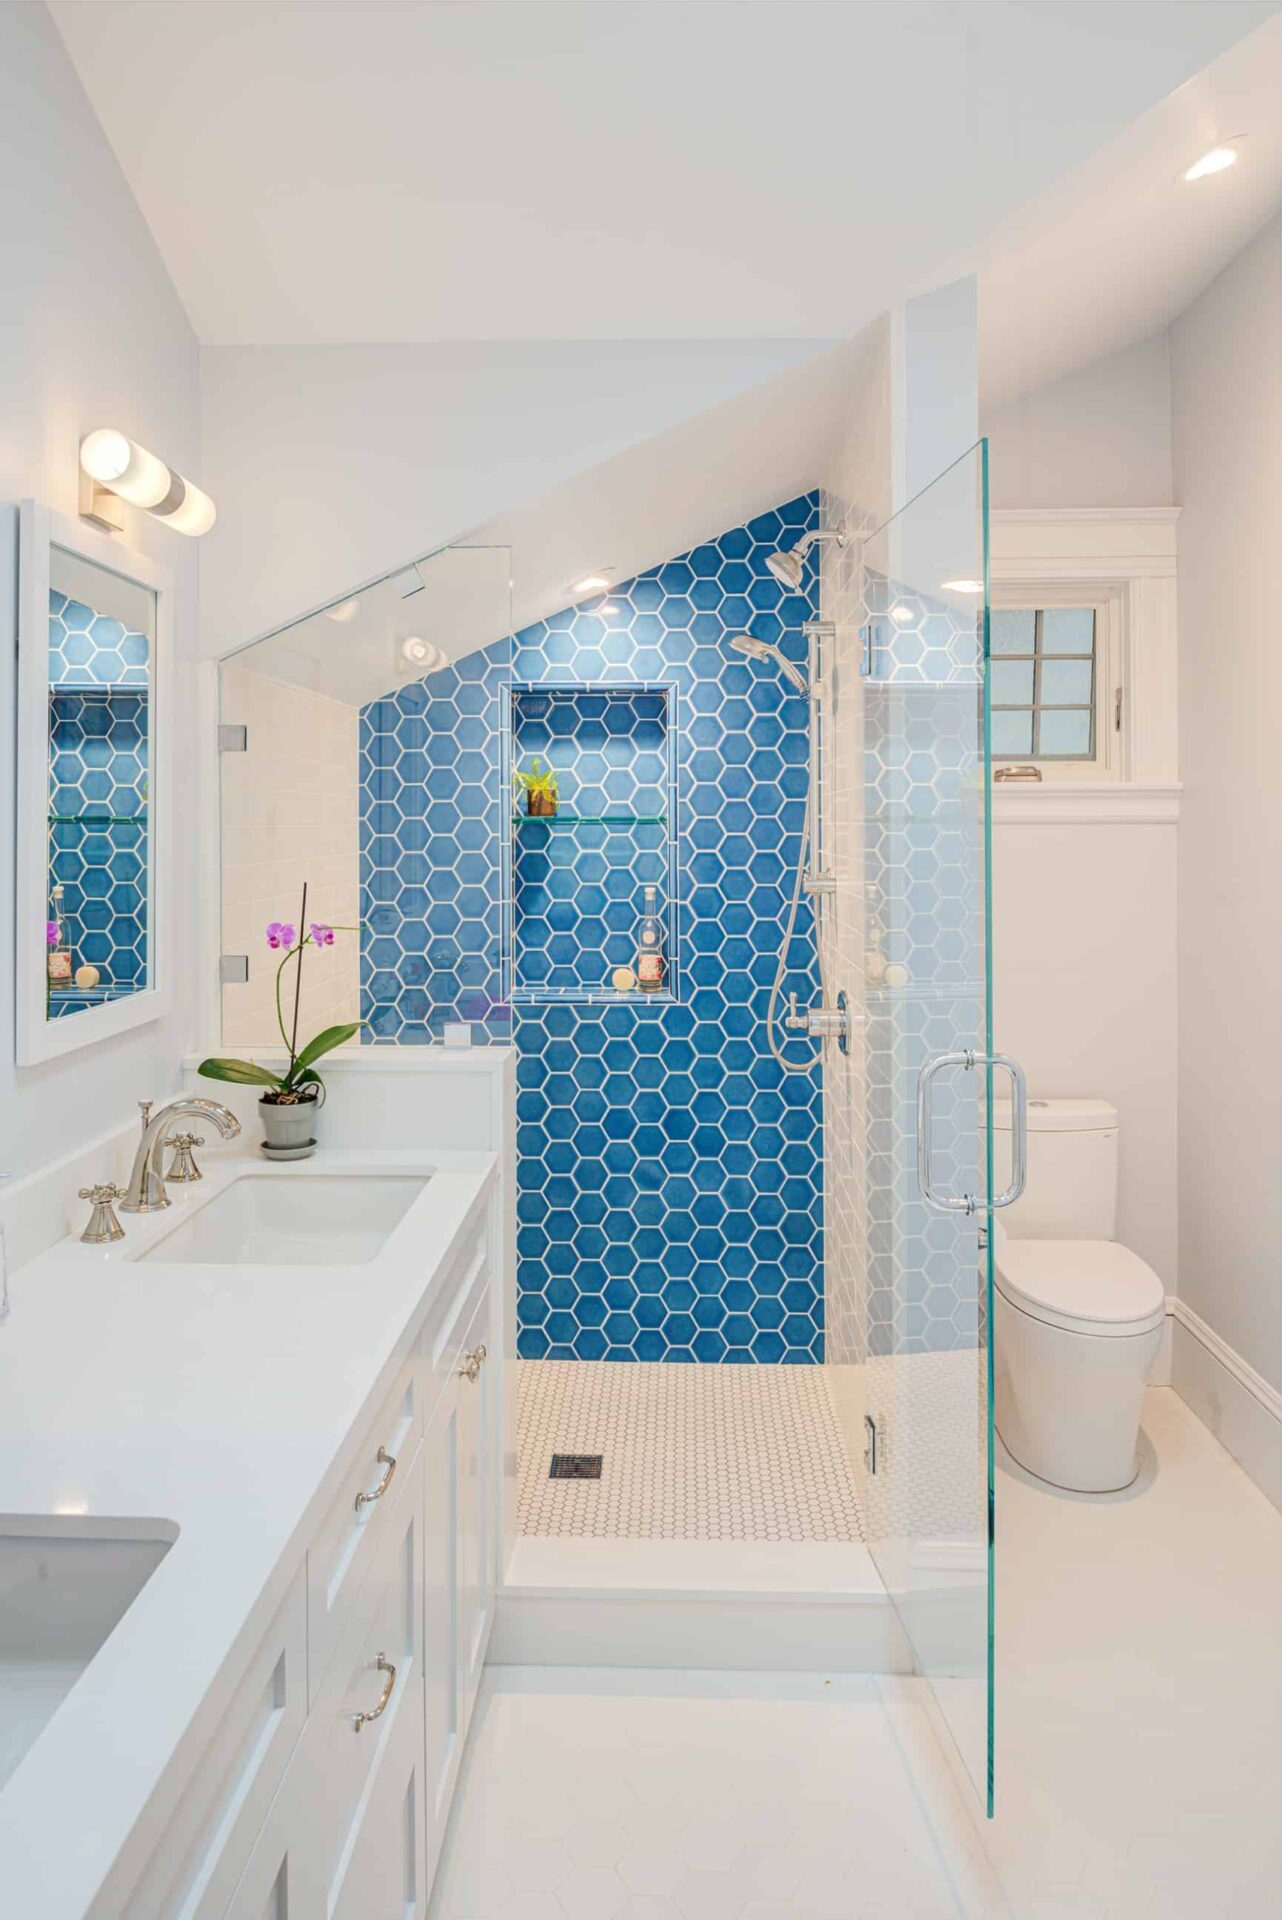 Modern, remodeled bathroom with stunning blue tile.